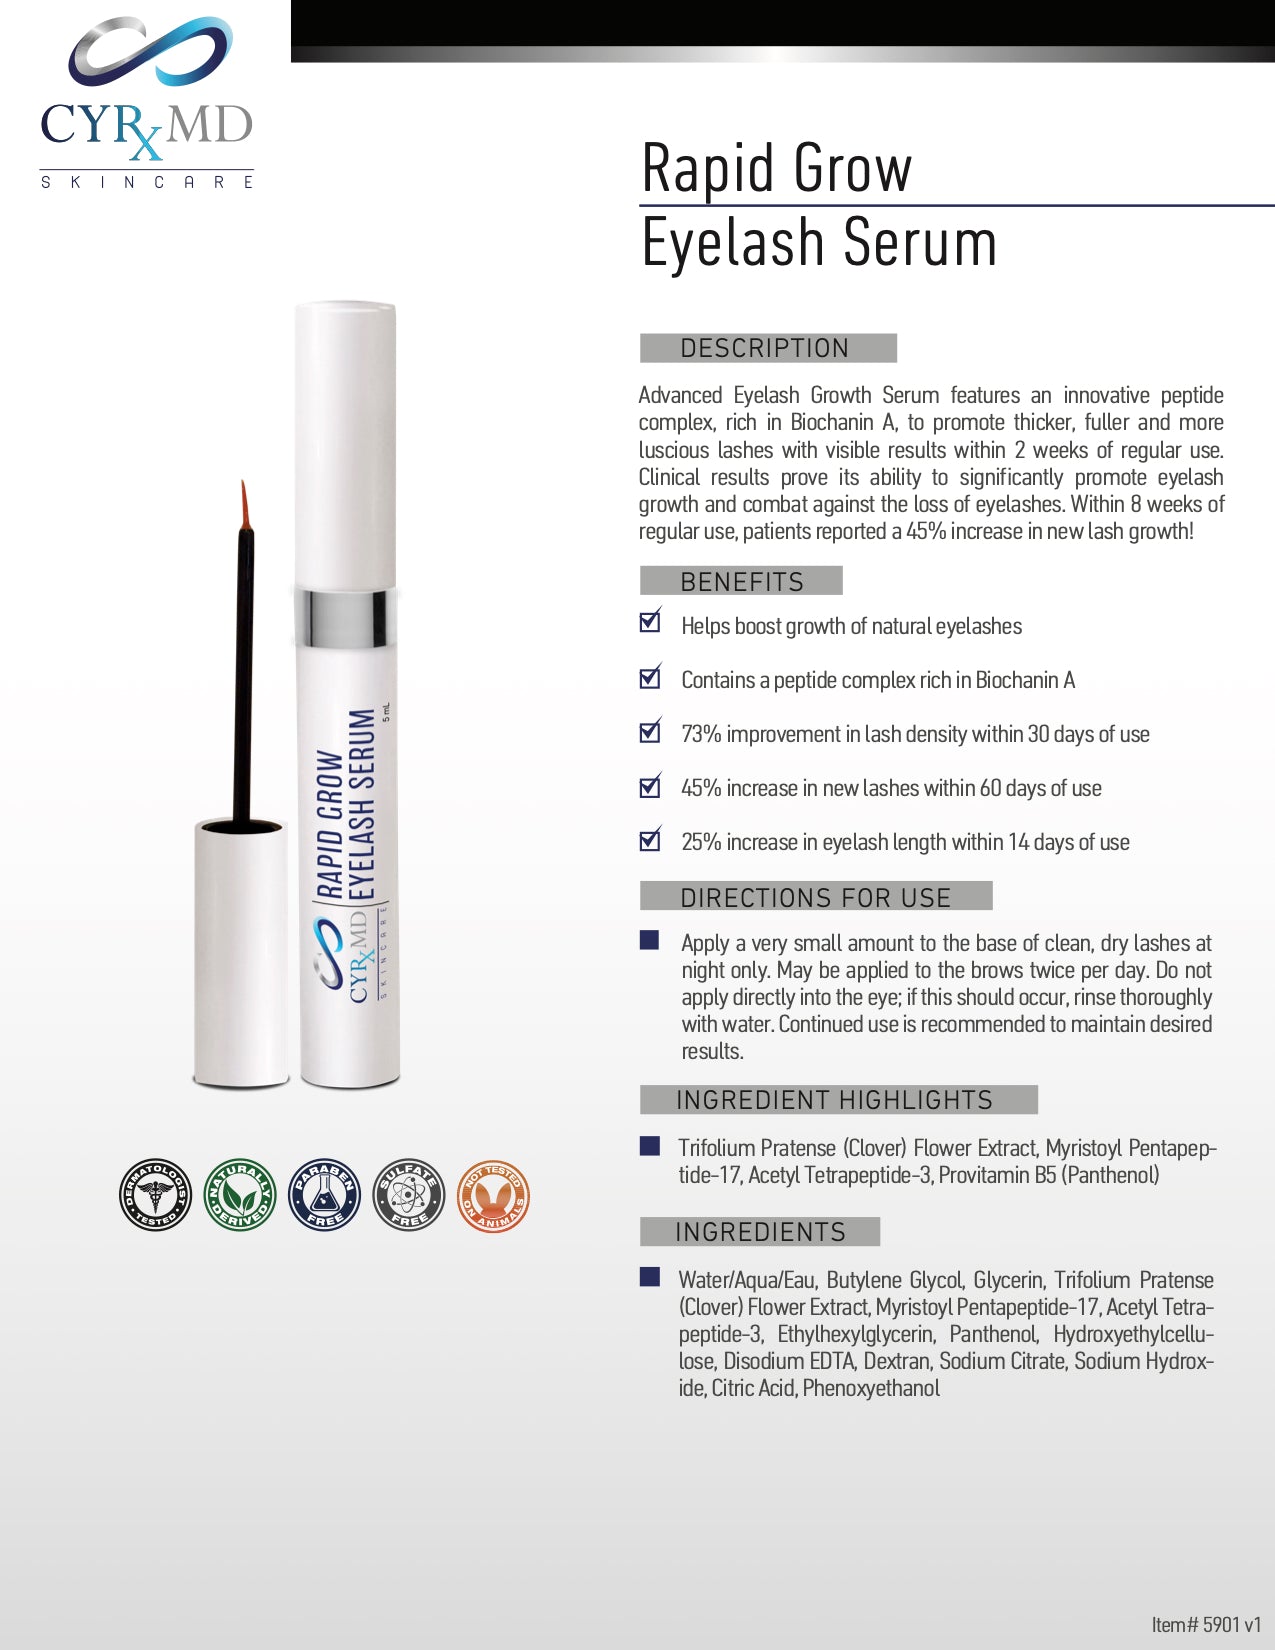 Rapid Grow Eyelash Serum